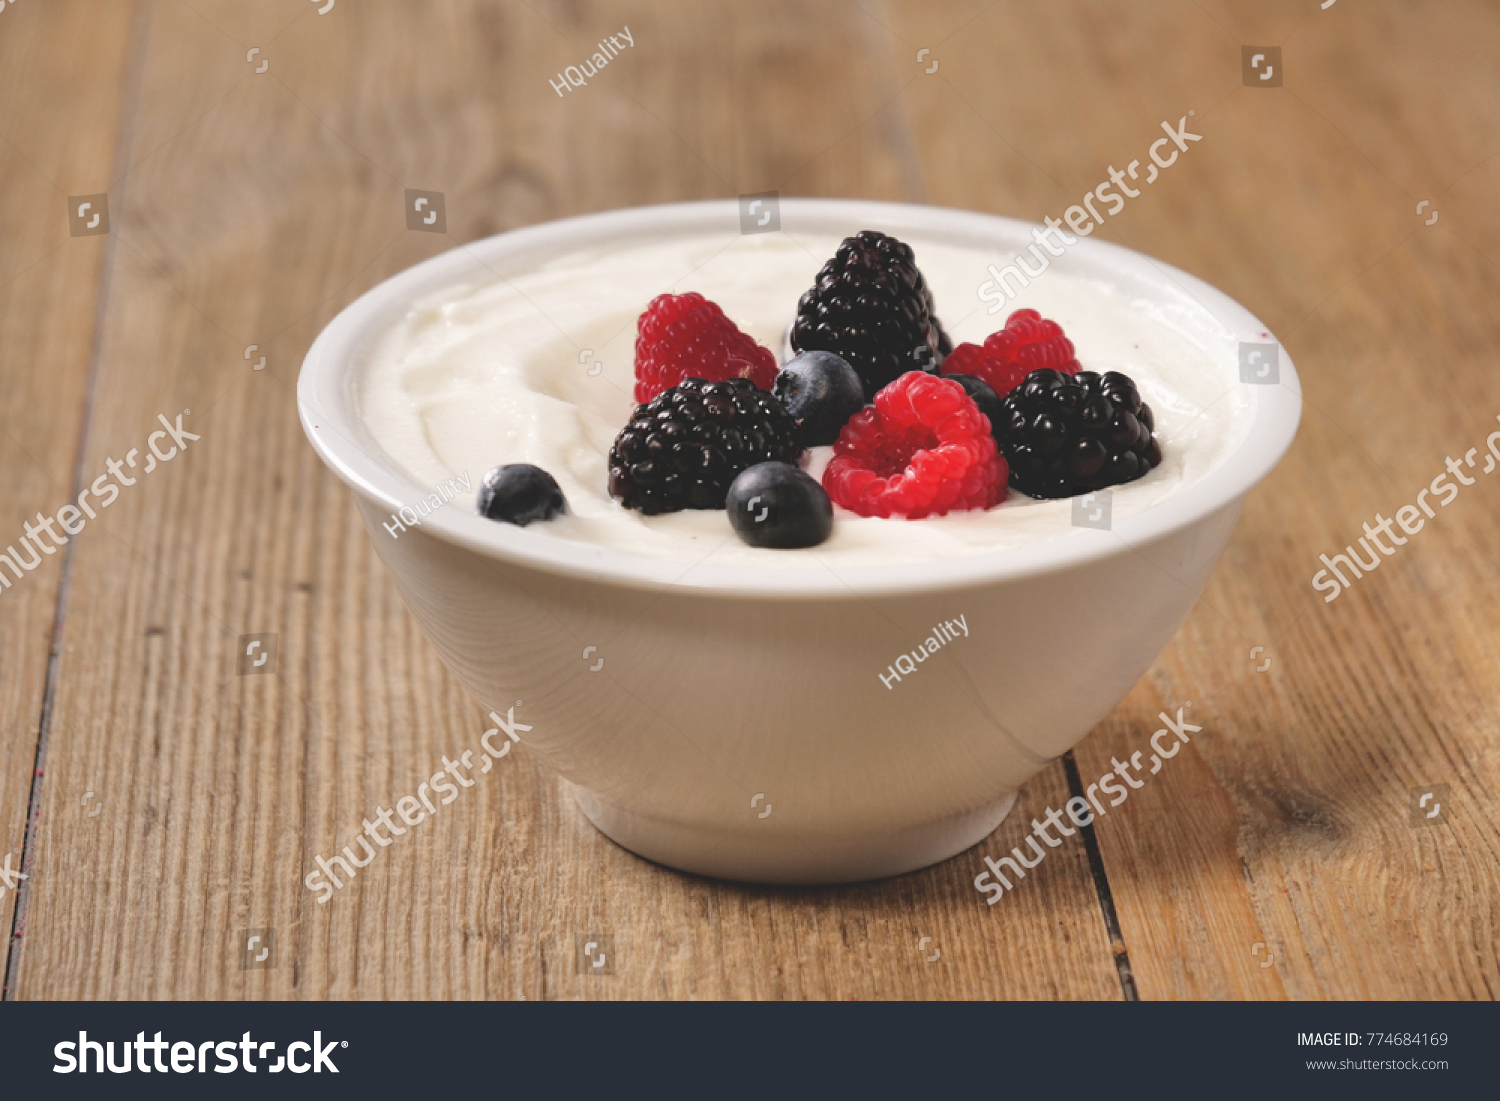 Composition of a typical genuine breakfast made with yogurt, blueberries, raspberries, blackberries, muesli. Concept of: fitness, diet, wellness and breakfasts. #774684169